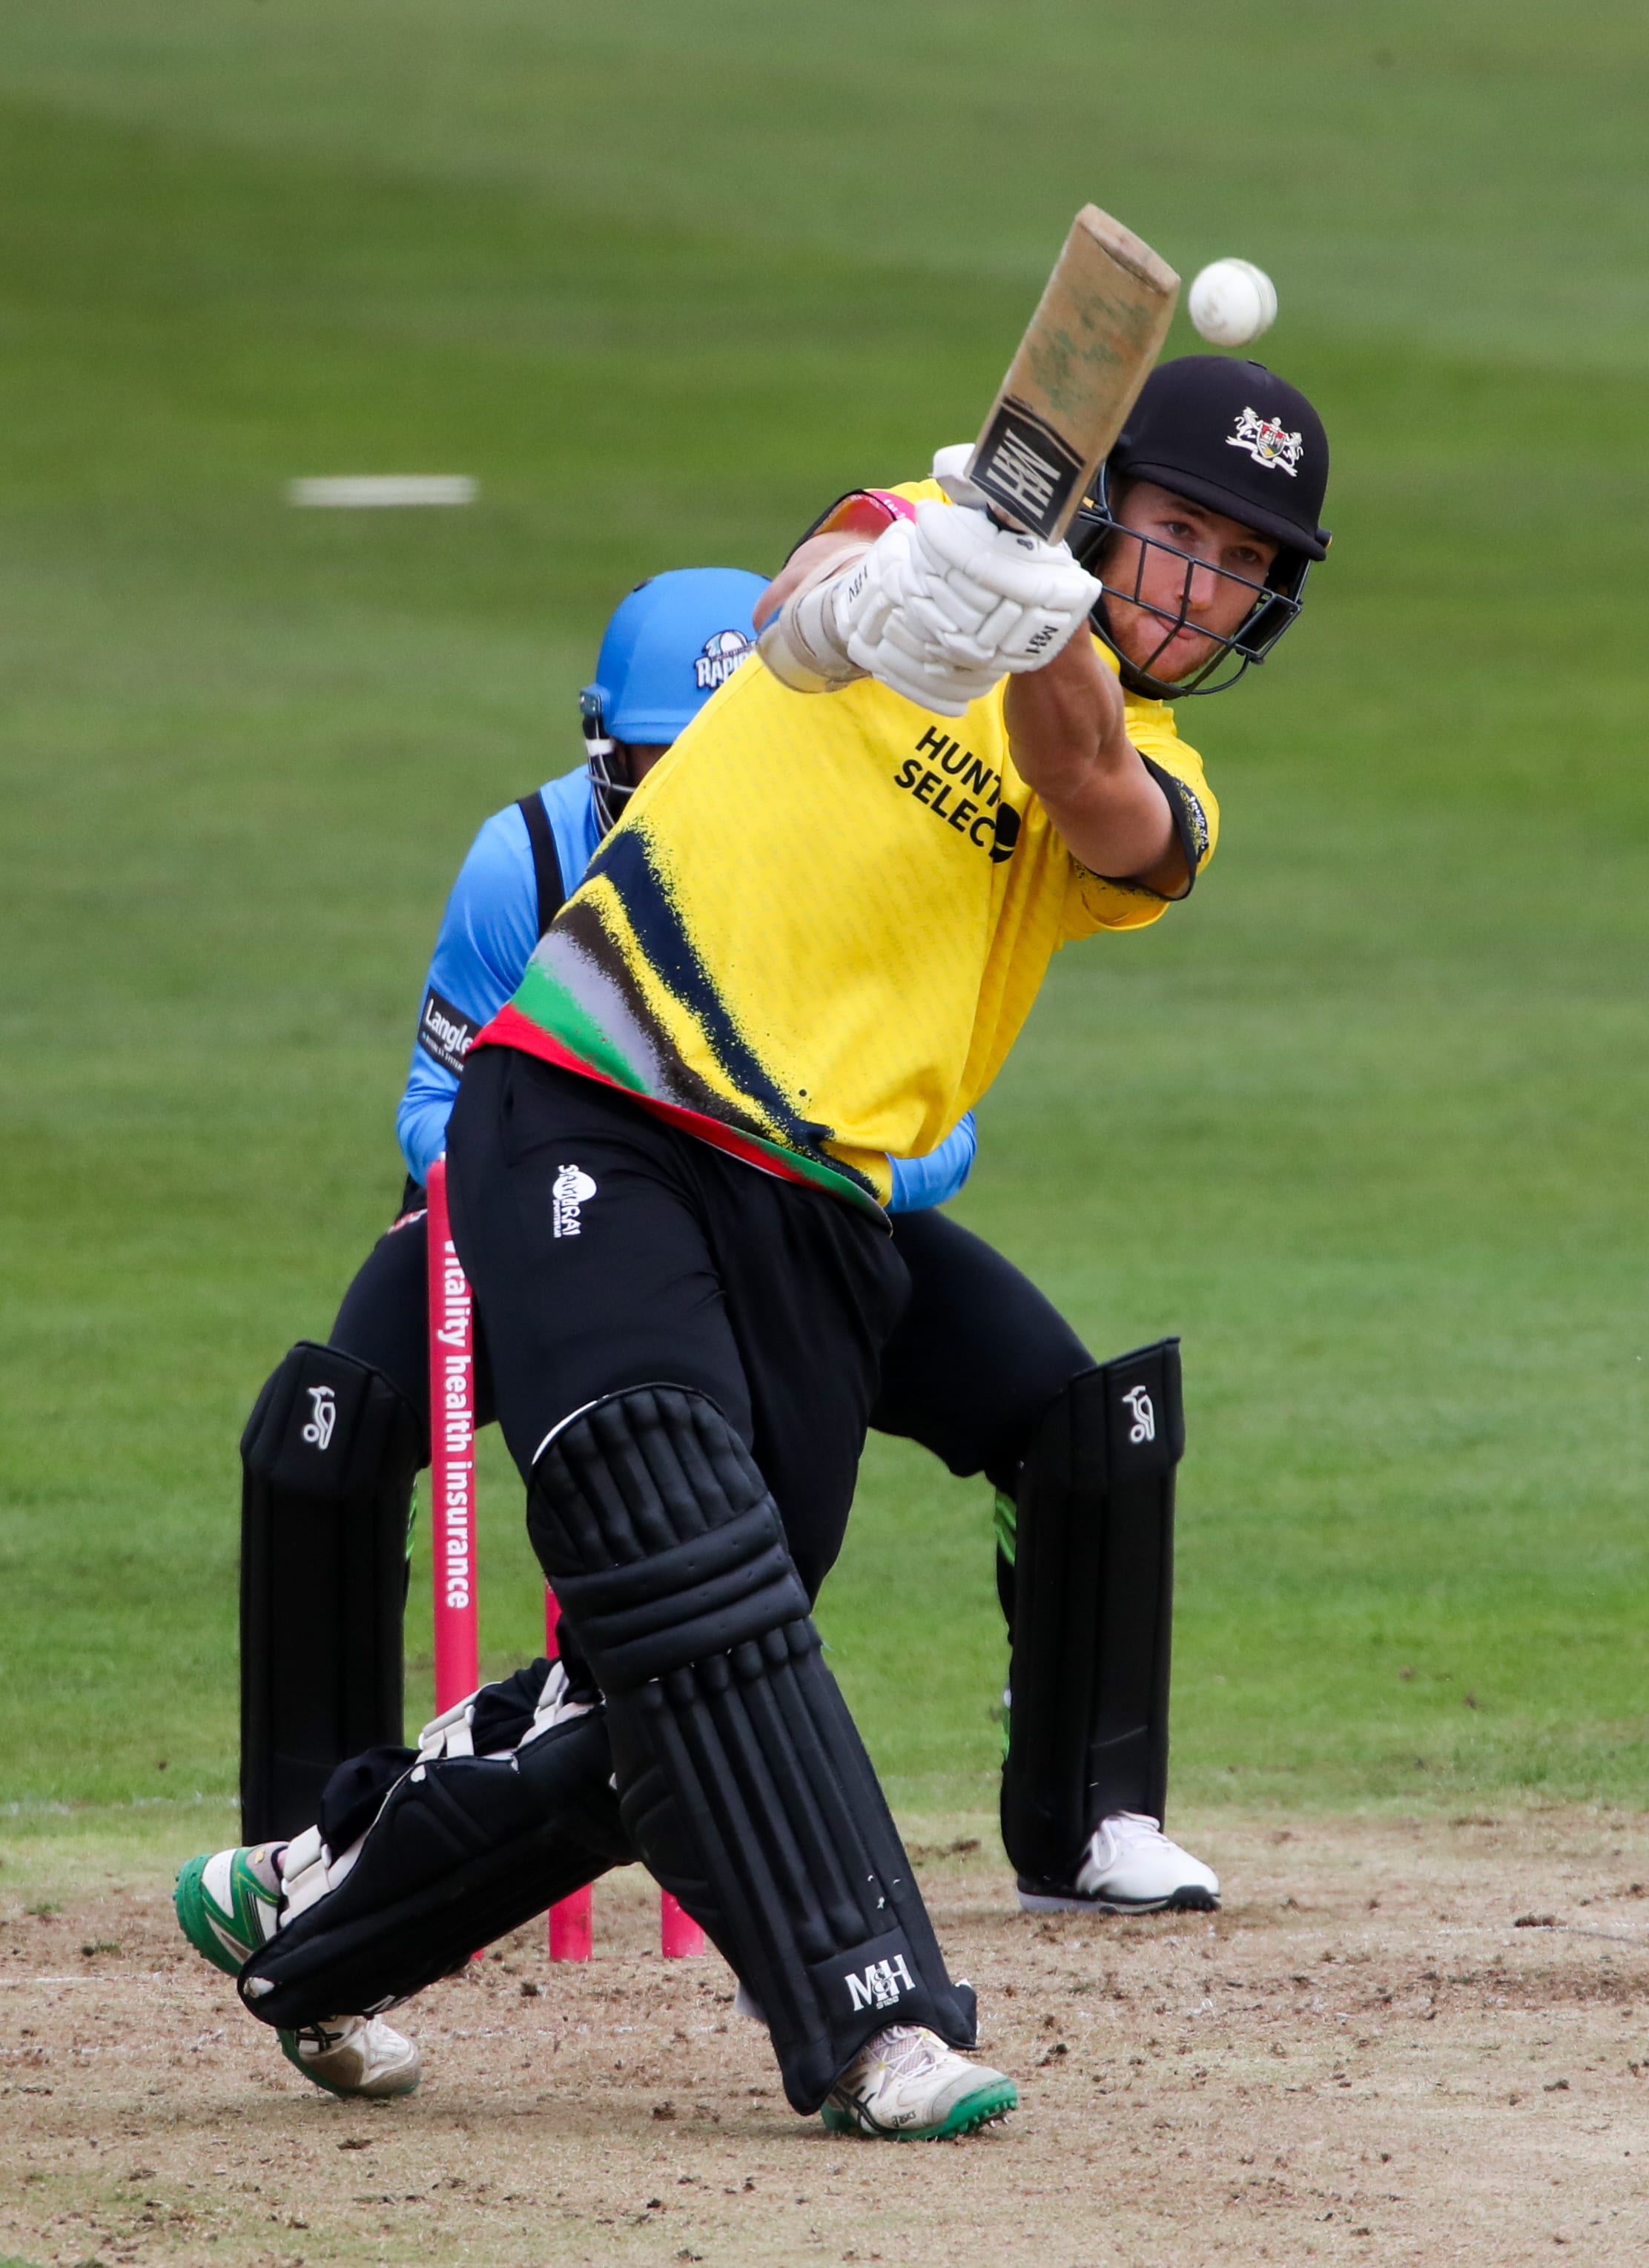 Gloucestershire batsman hitting a ball at the T20 